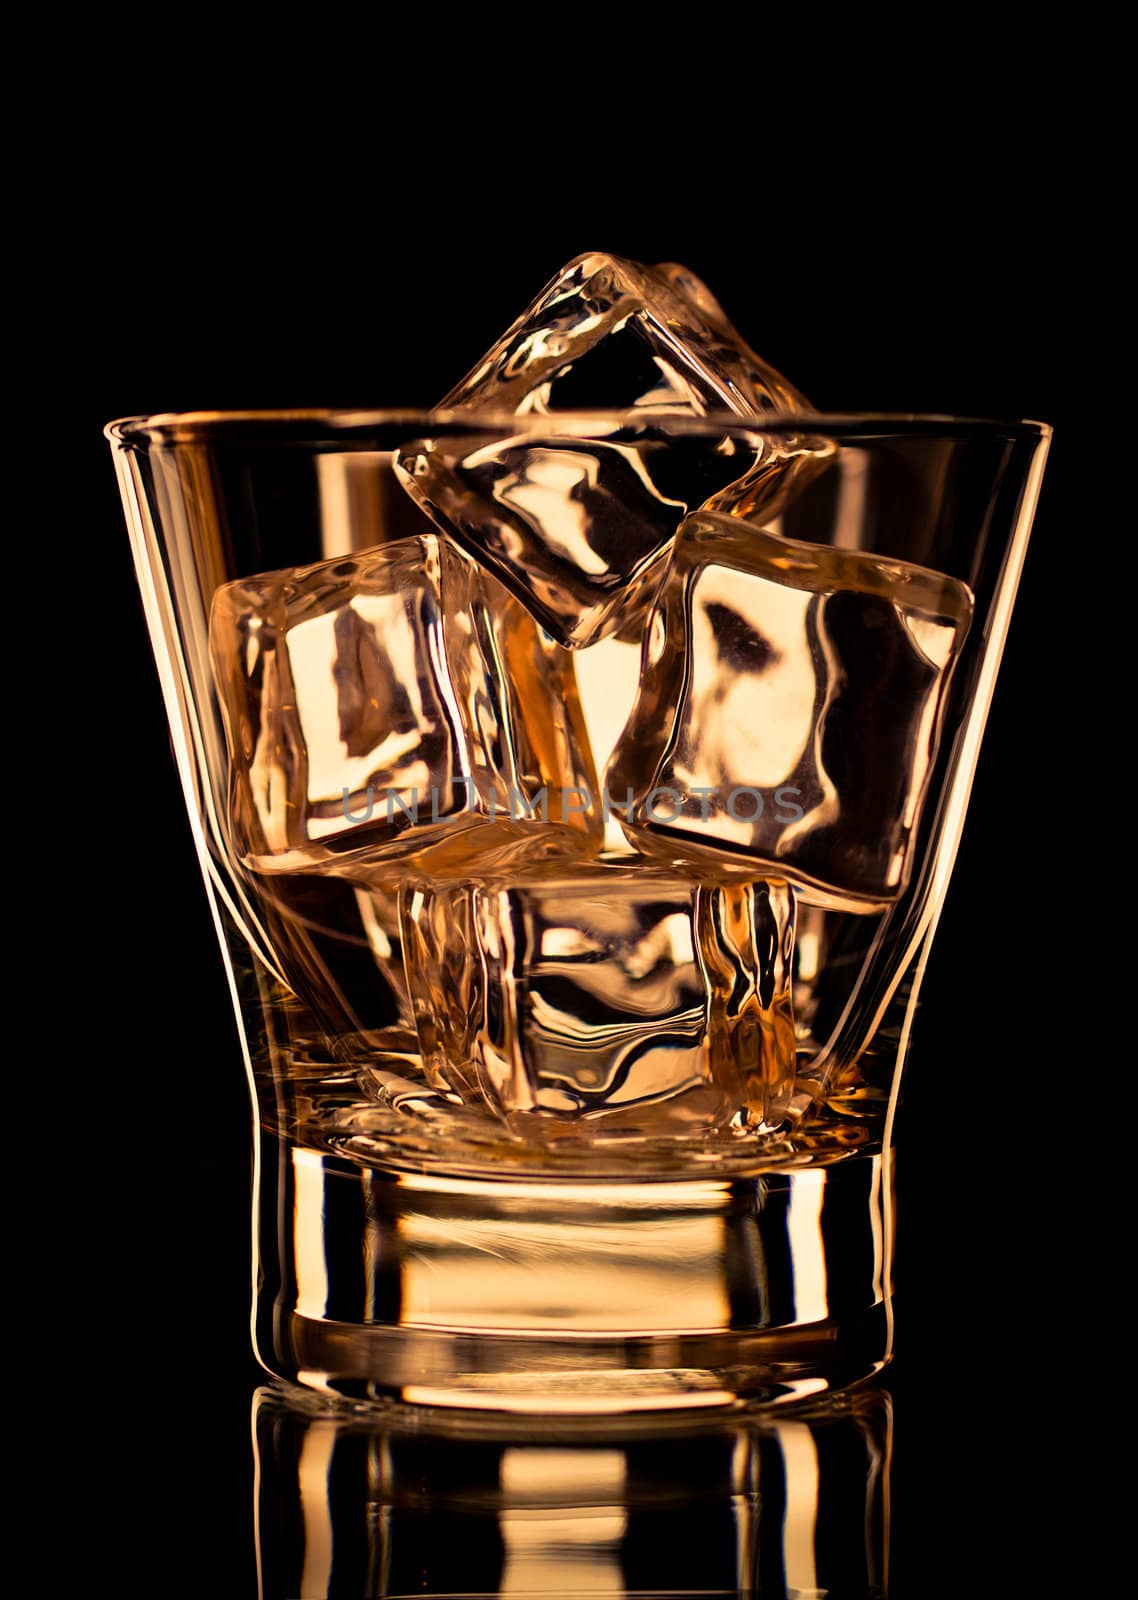 Whiskey glass by Alex_L